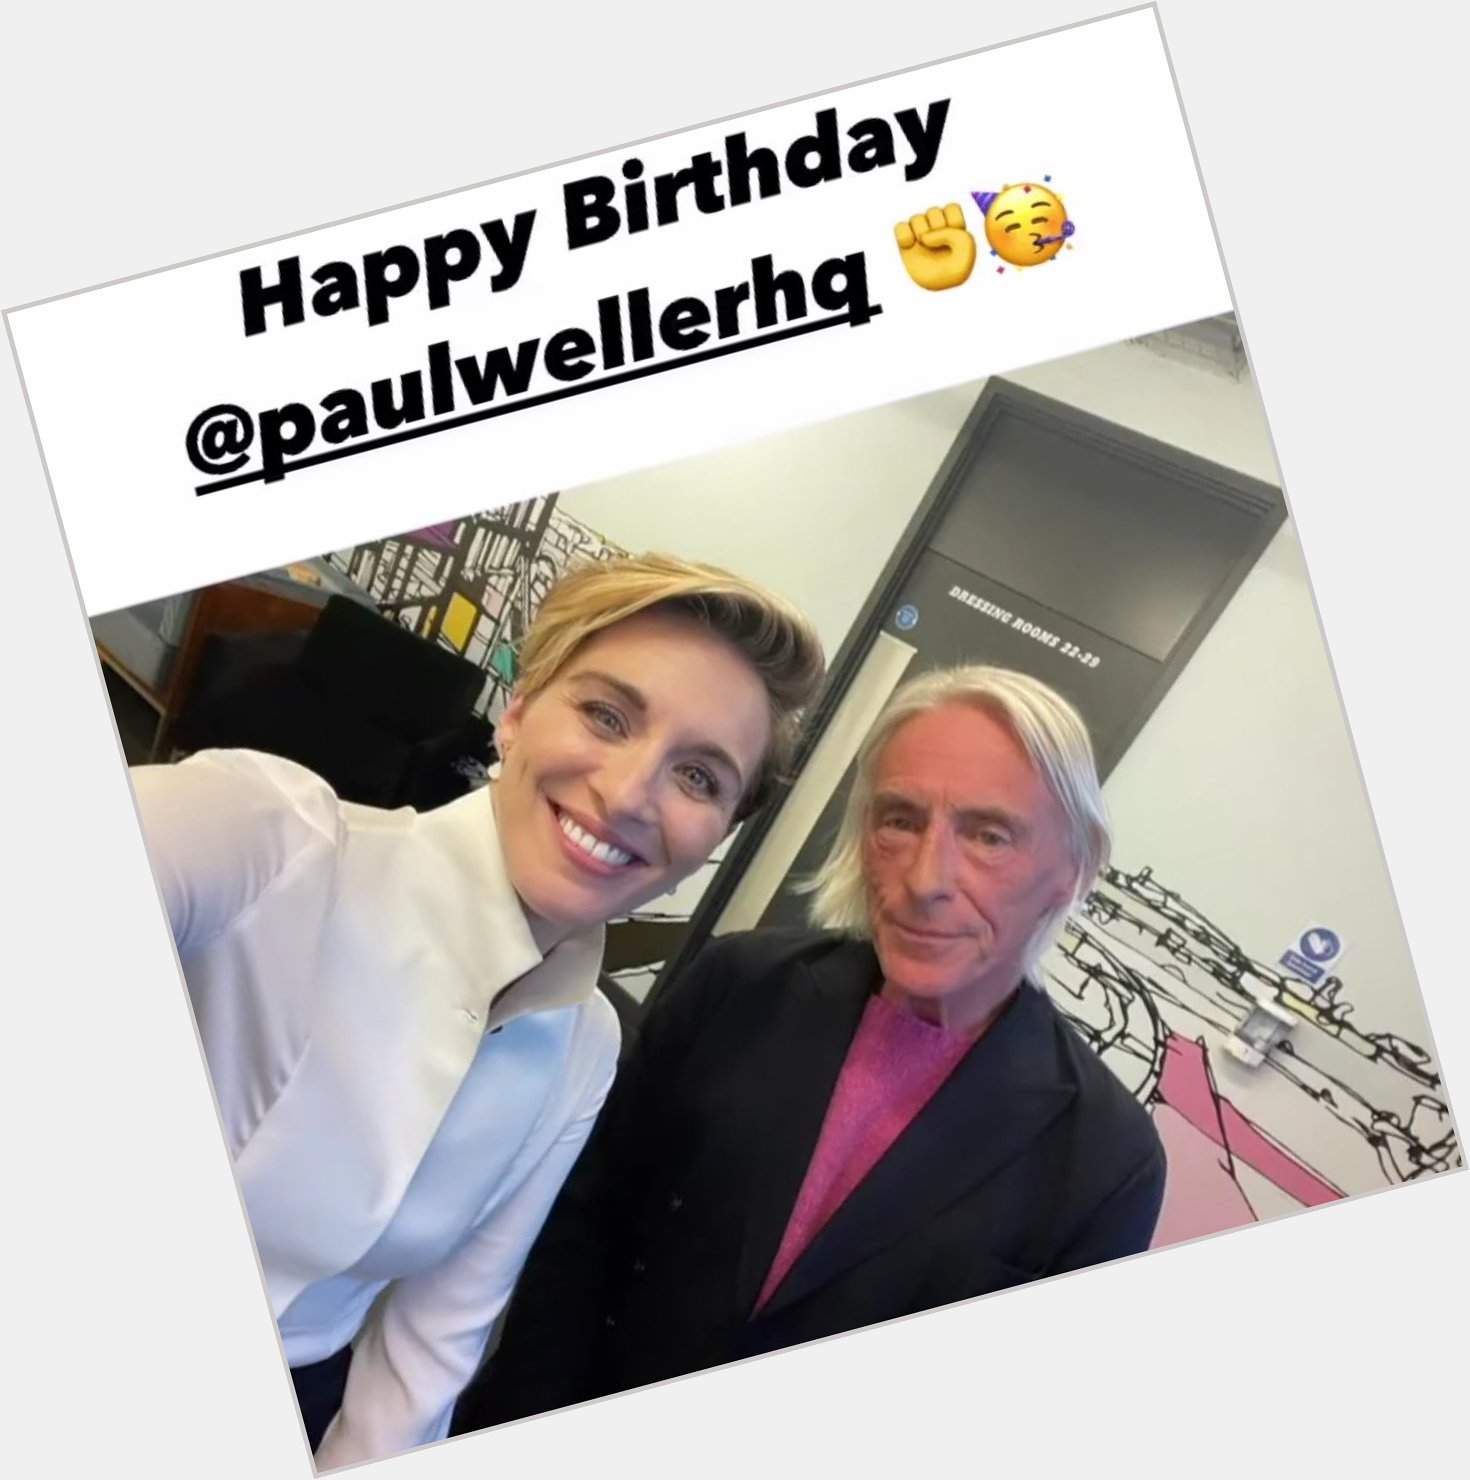 Vicky wishing Paul Weller a happy birthday via Instagram story! 